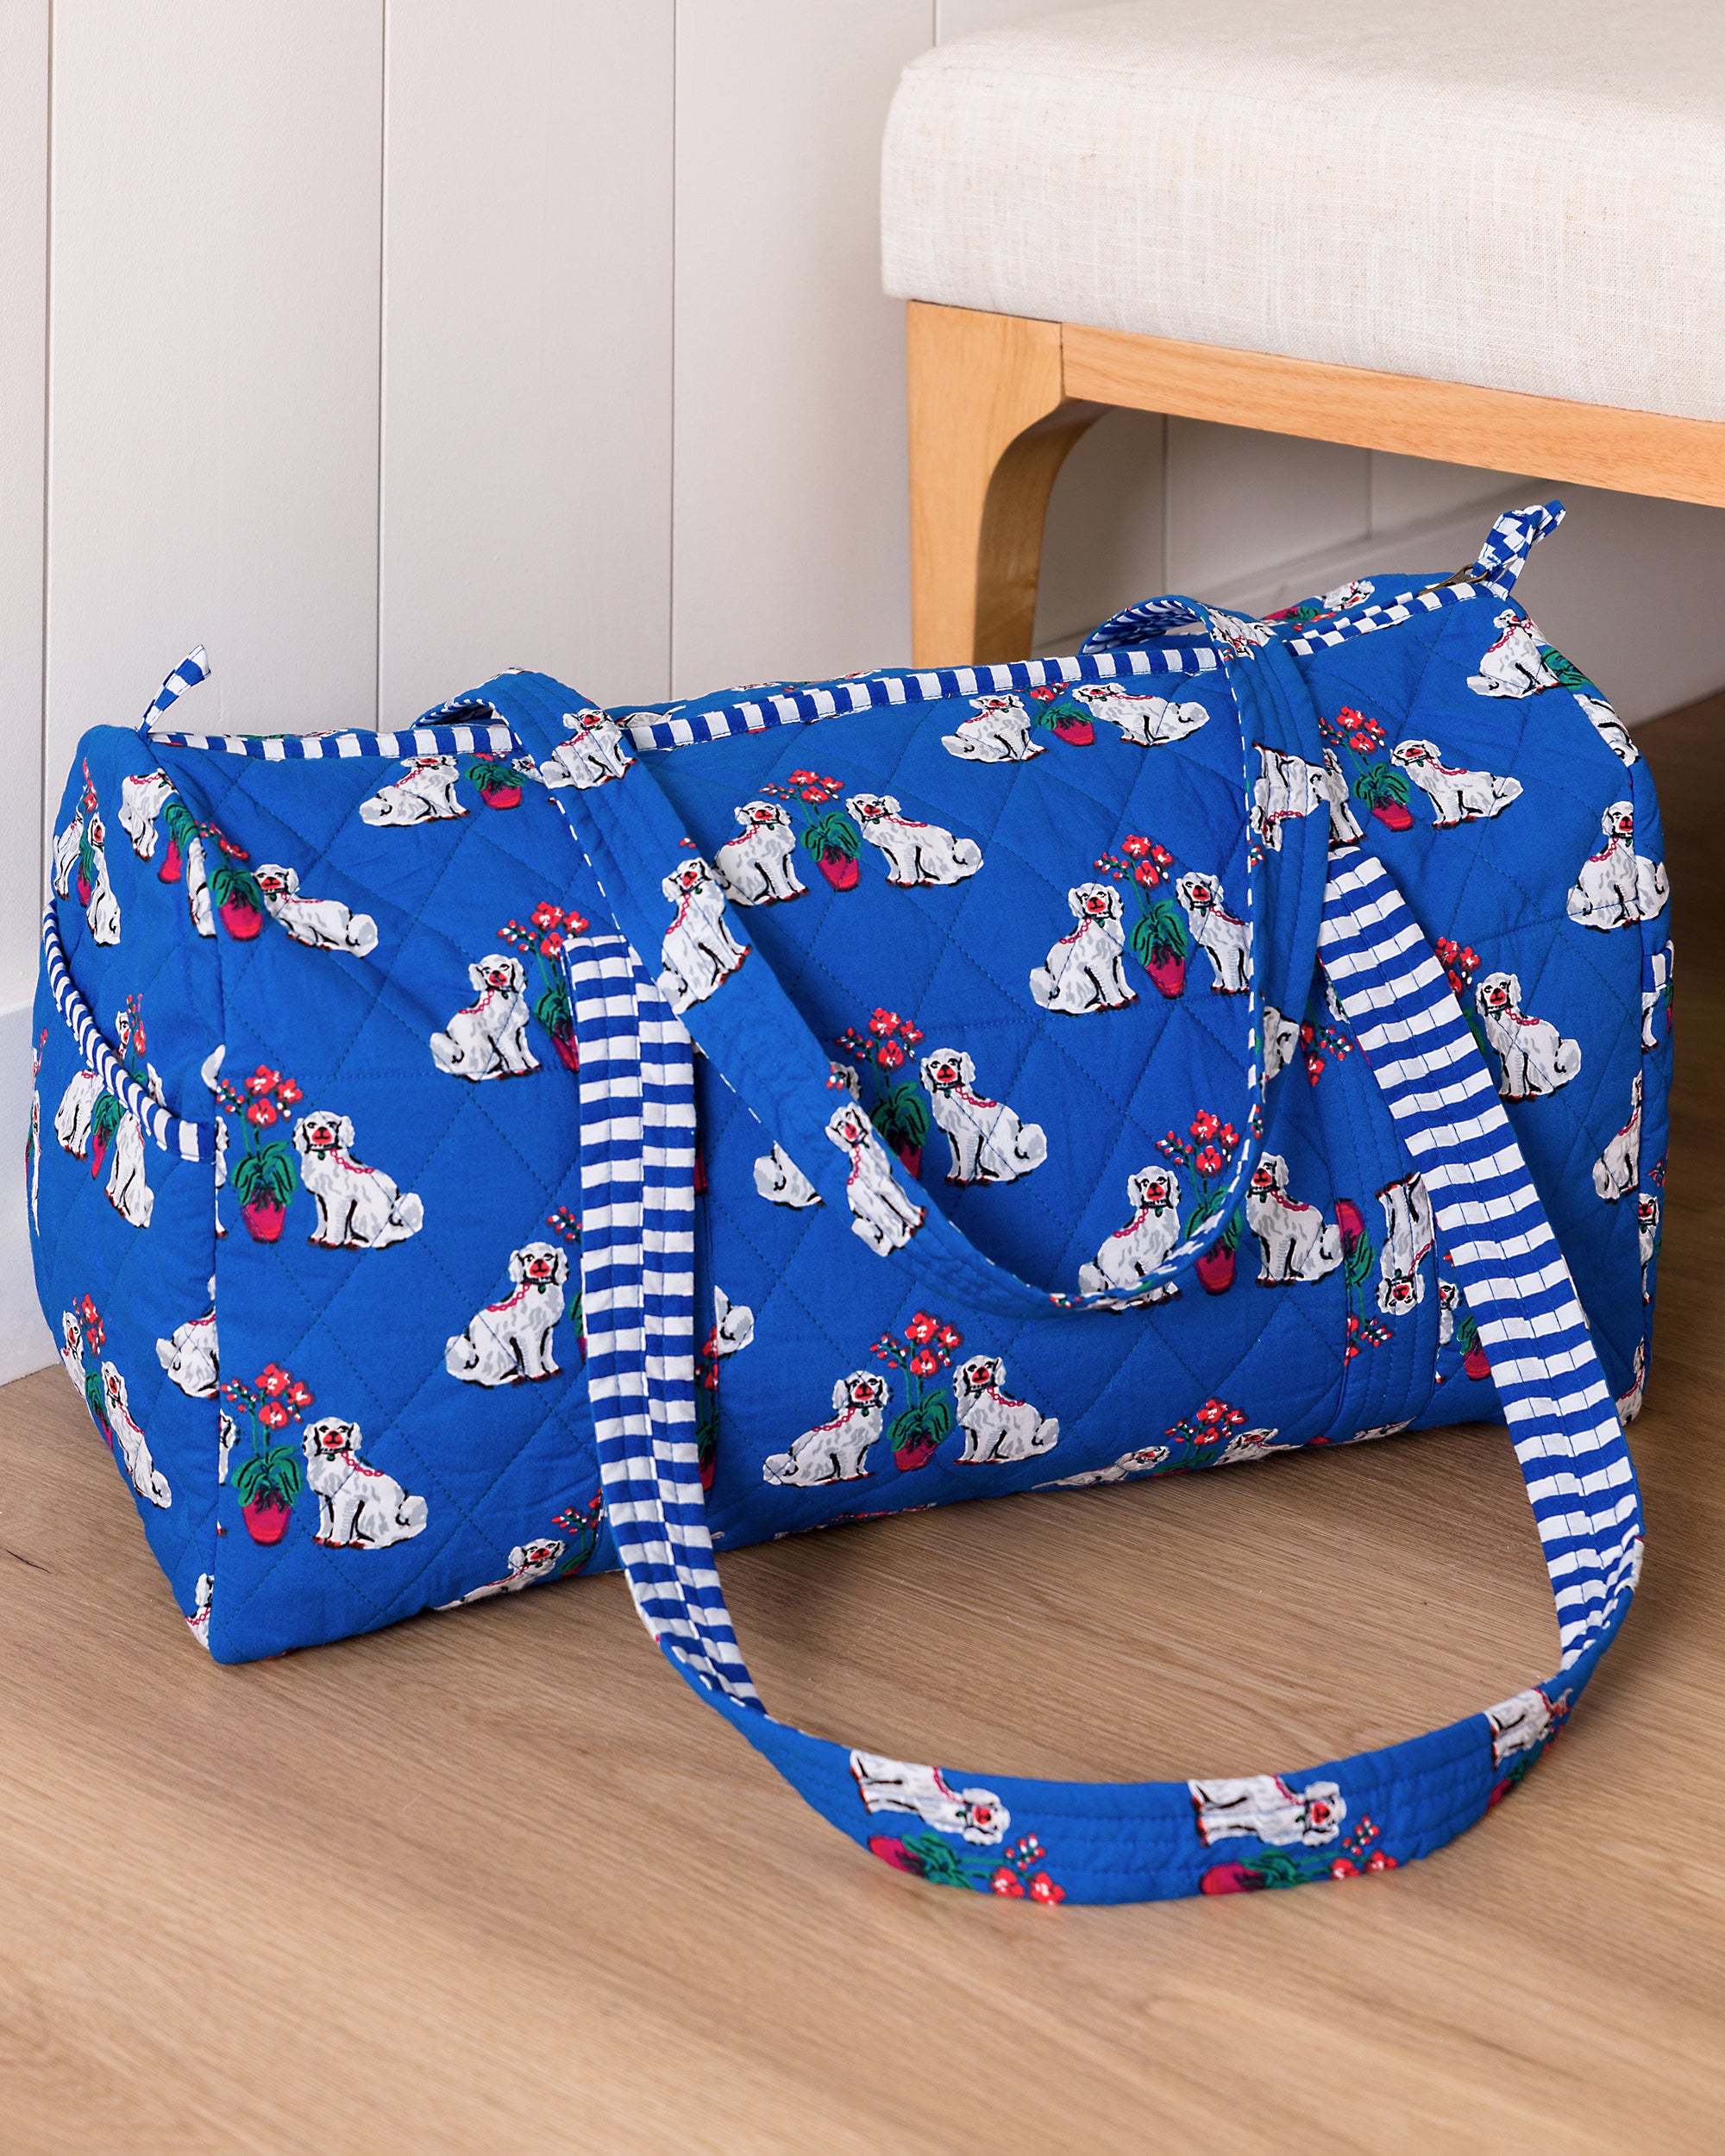 Matching Spaniels - Quilted Duffle Bag - Queen Blue - Printfresh